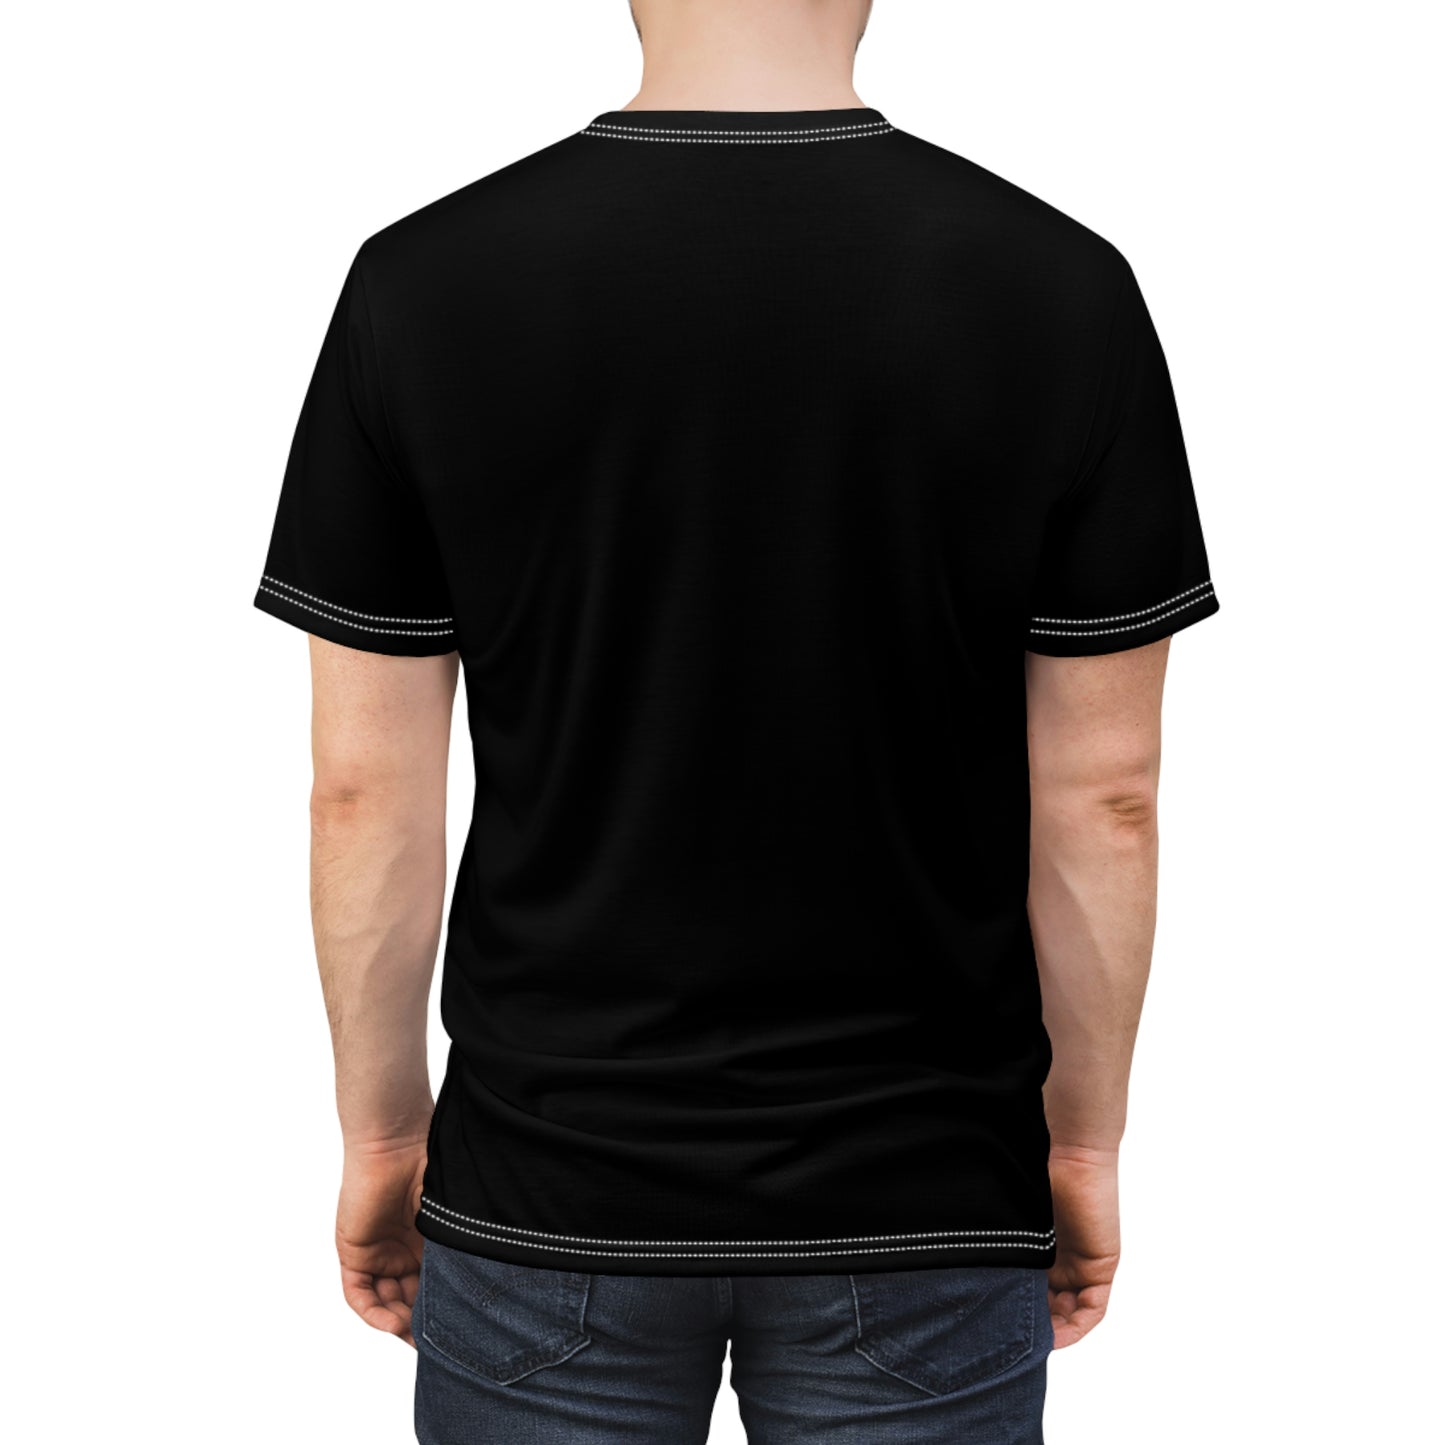 Symbiosis - Unisex All-Over Print Cut & Sew T-Shirt